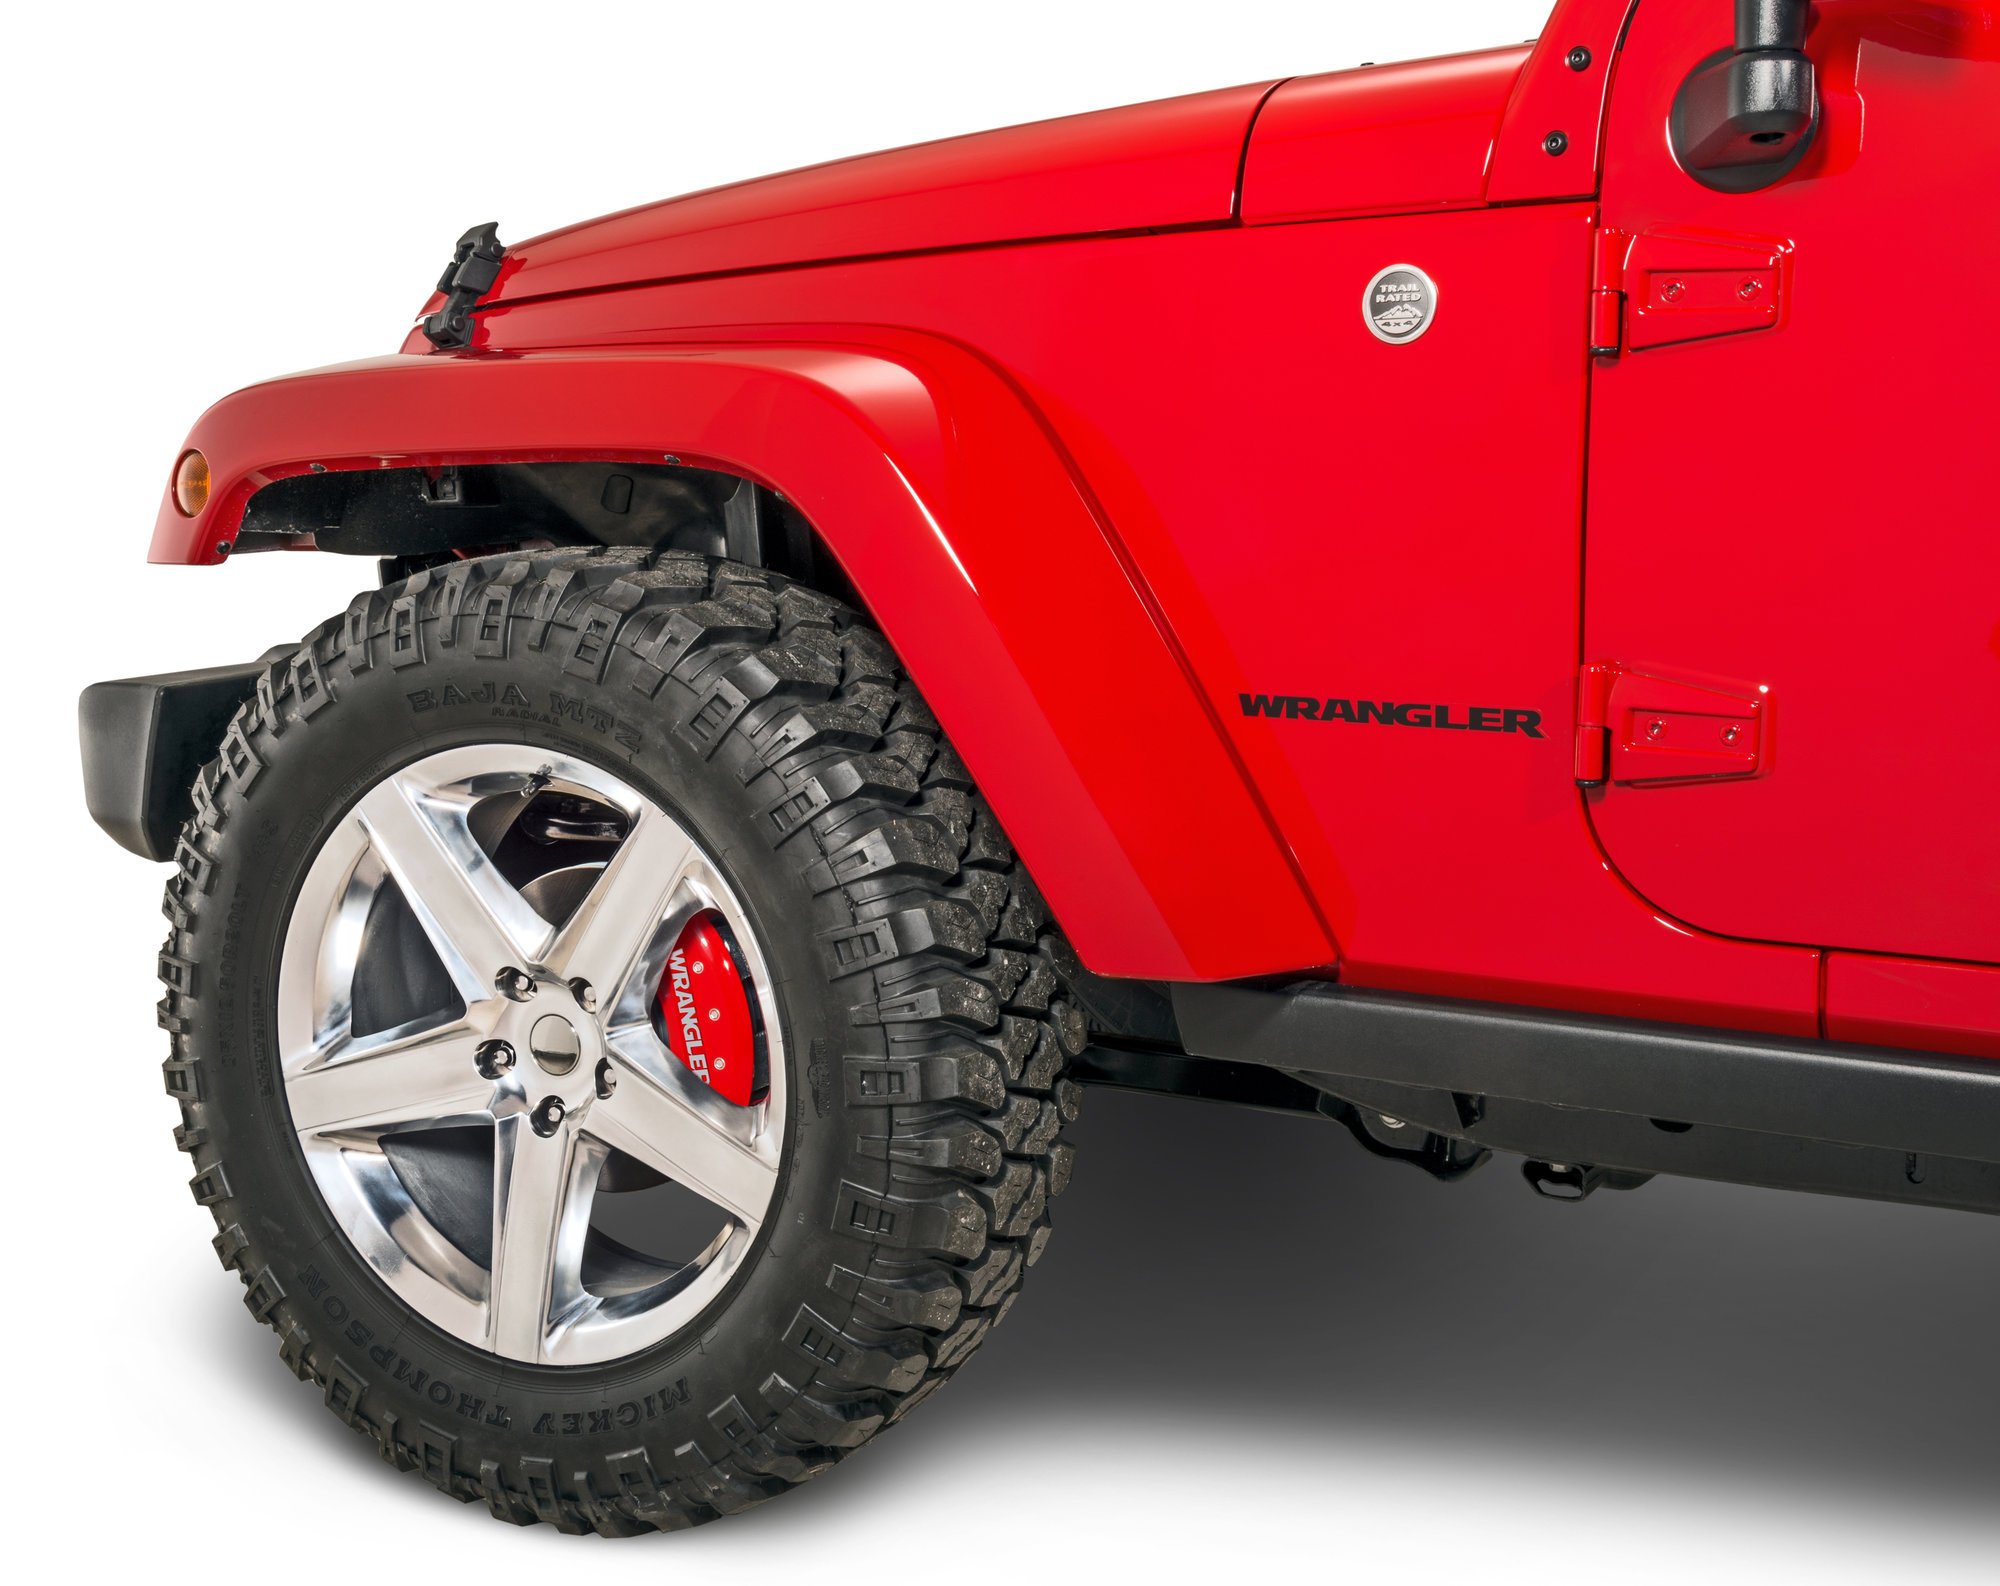 MGP Caliper Covers Wrangler Logo Brake Caliper Covers for 07-18 Jeep  Wrangler JK | Quadratec